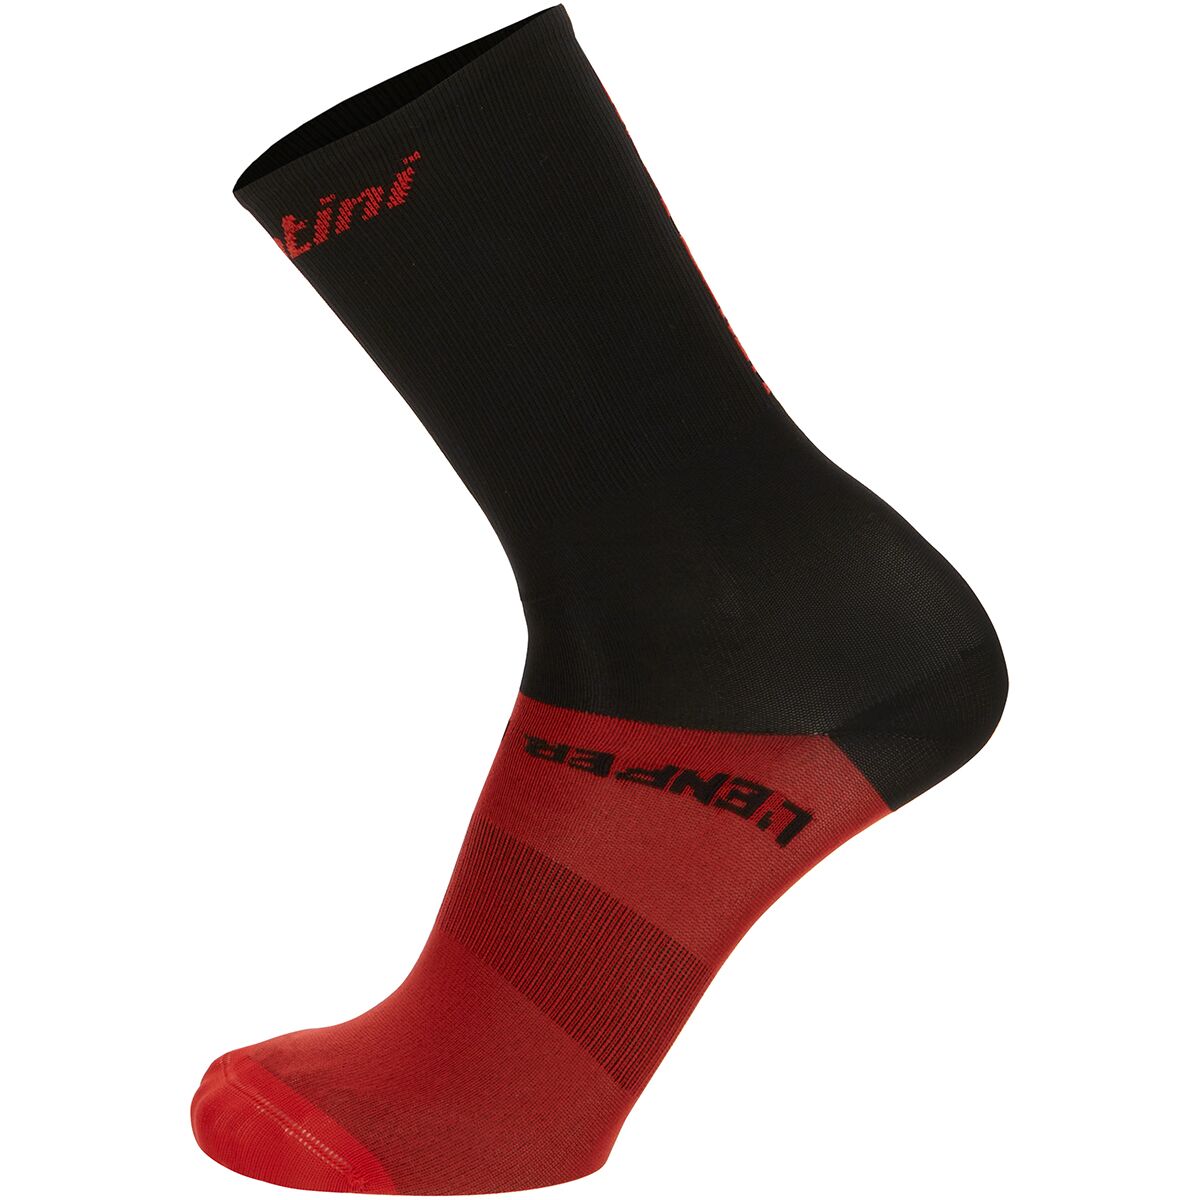 Santini Paris Roubaix High Profile Socks